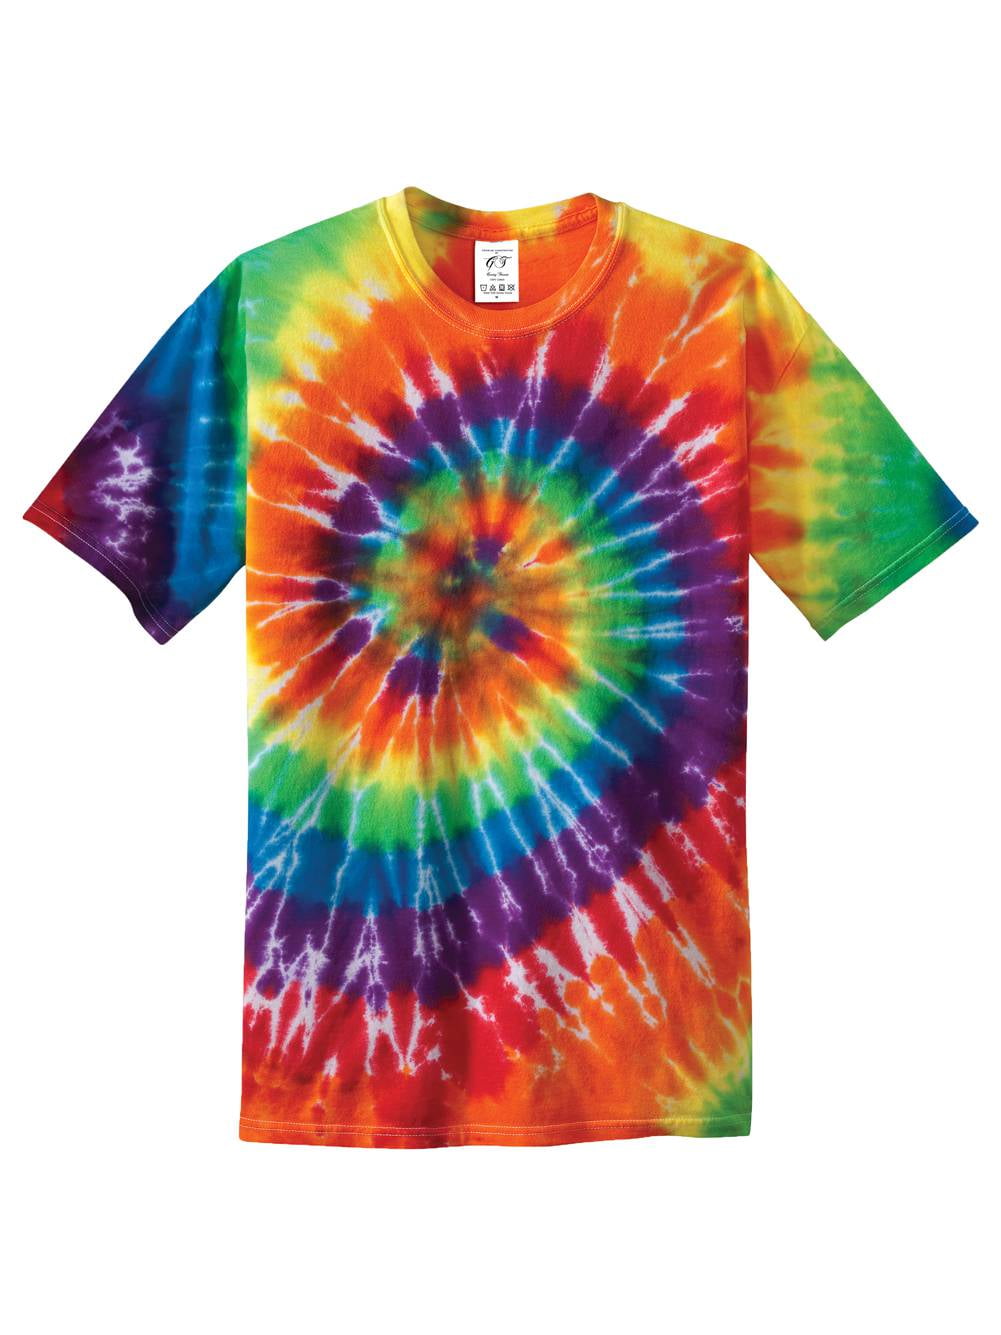 Adult Long Sleeve TIE DYE Neon Rainbow art T Shirt plus sizes 2X 3X 4X hippie 